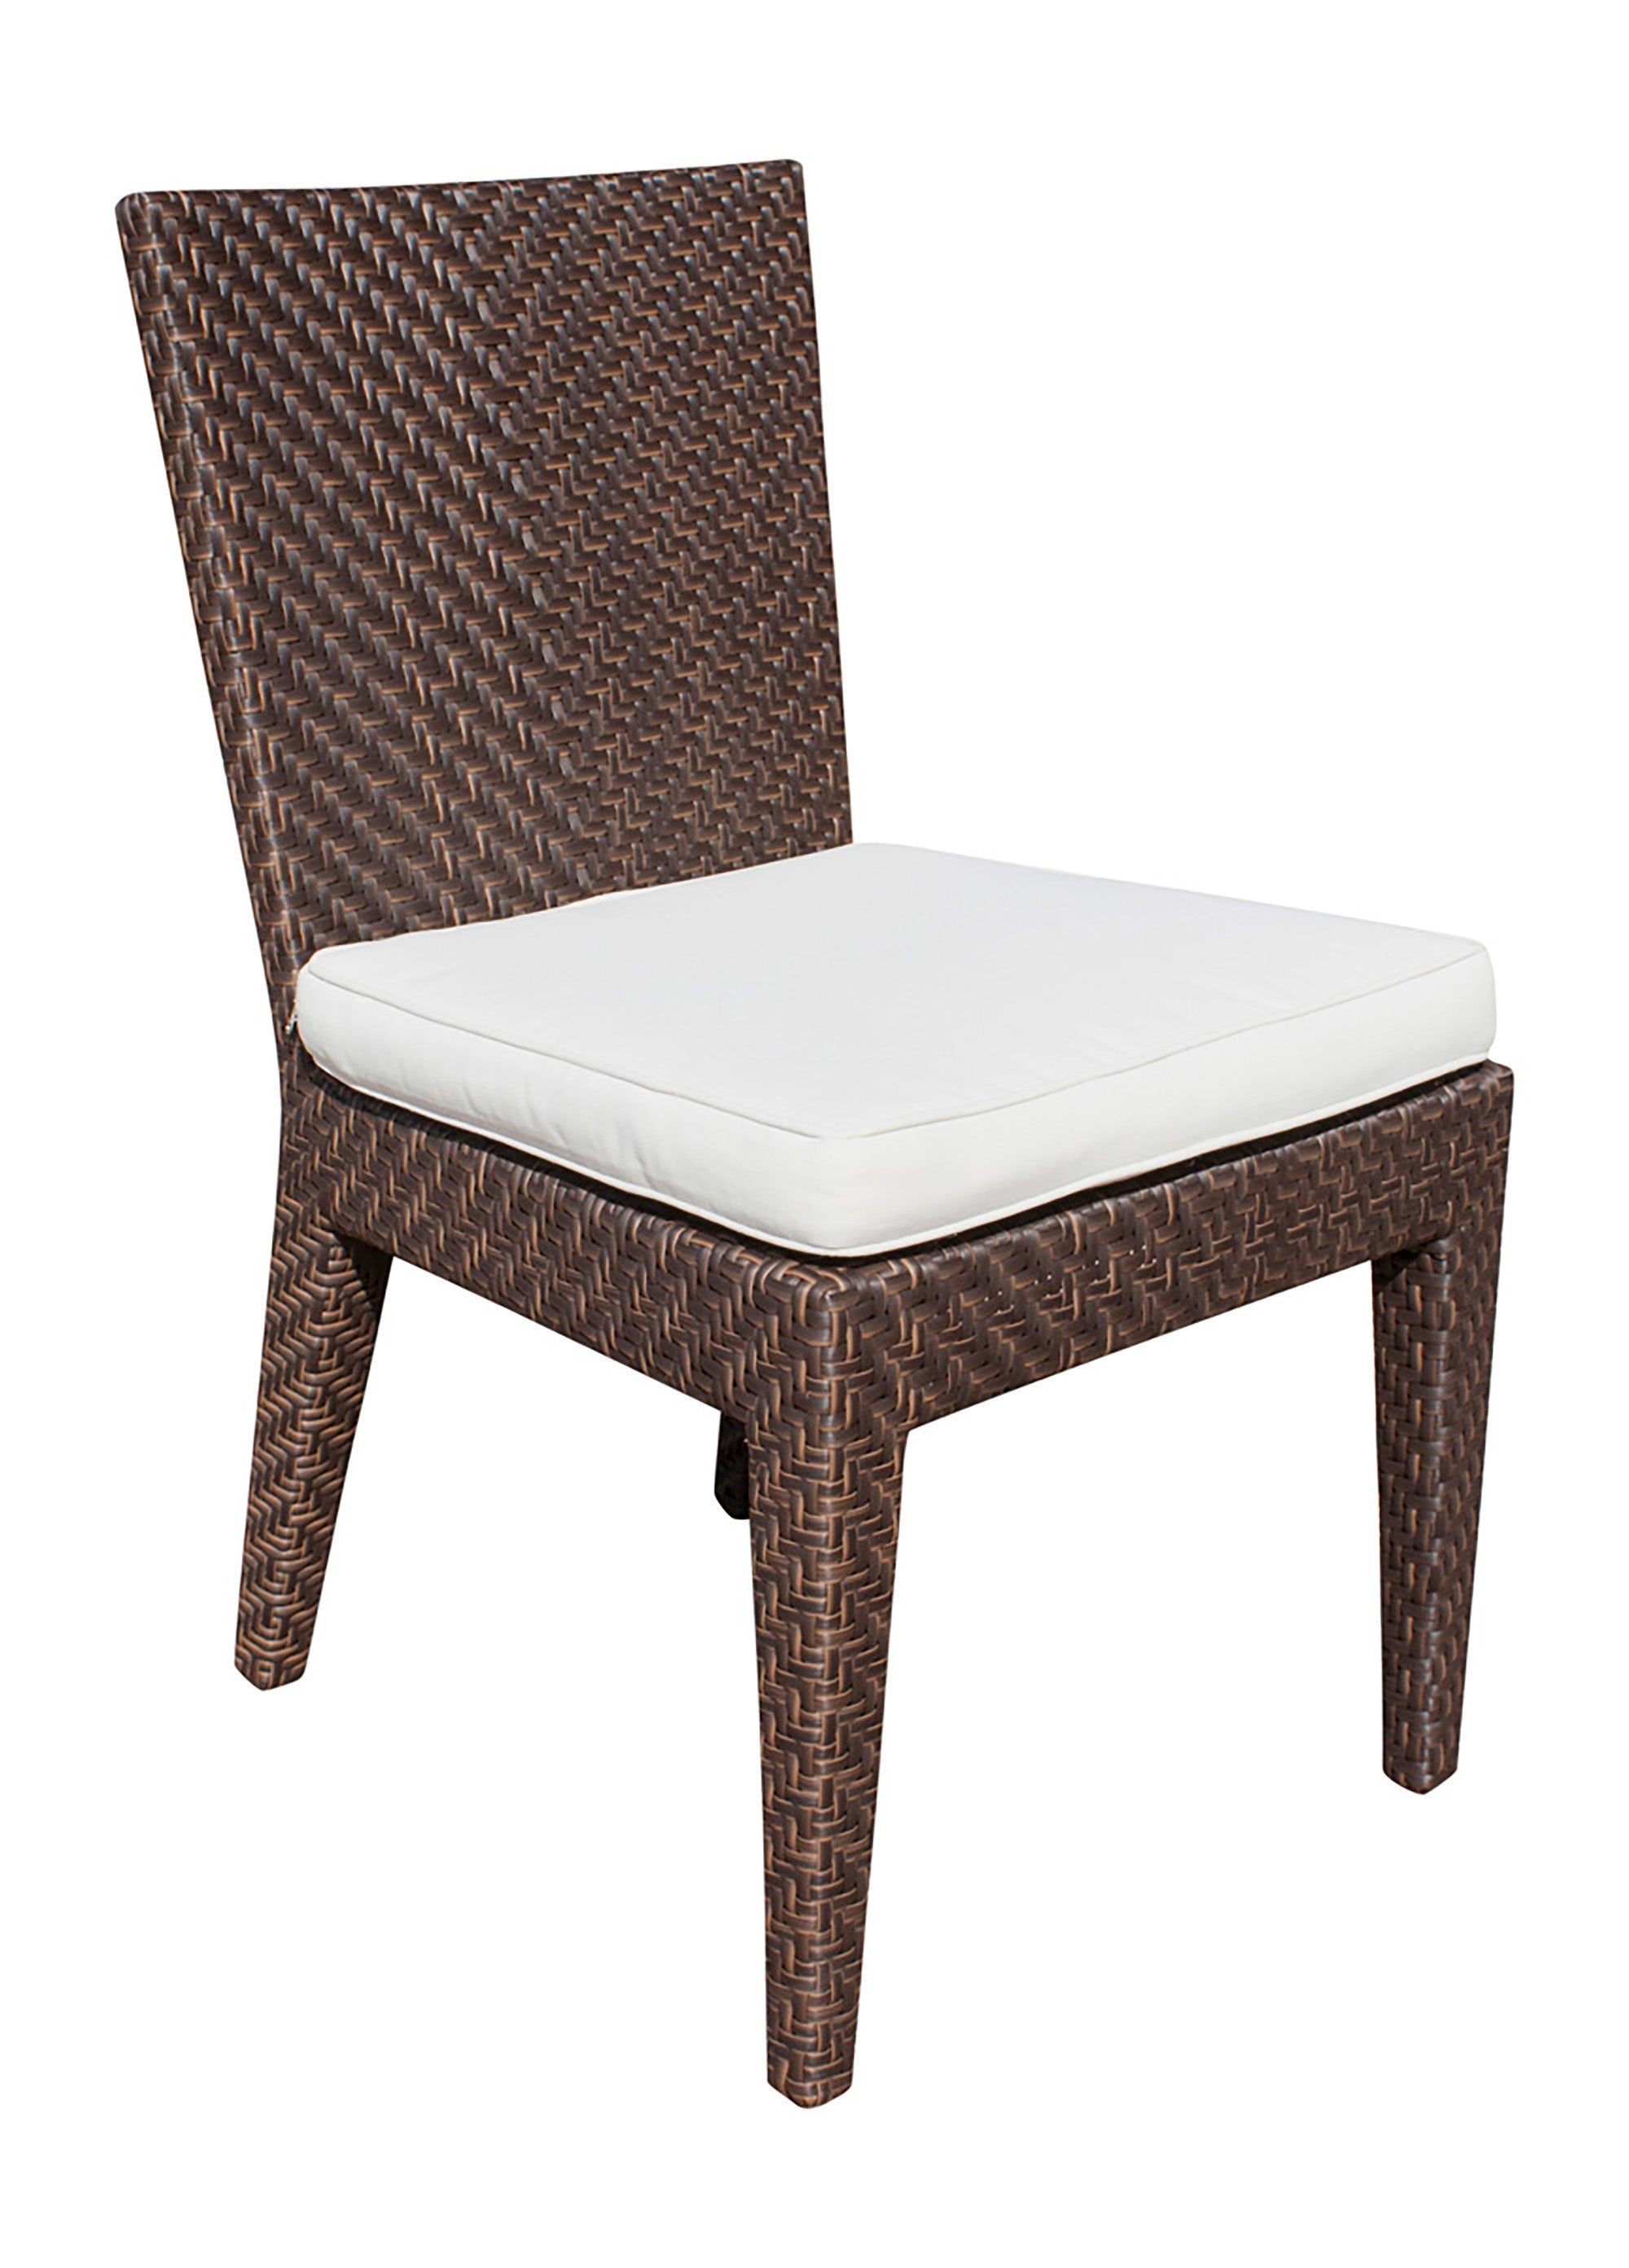 Hospitality Rattan Soho Side chair with Cushion